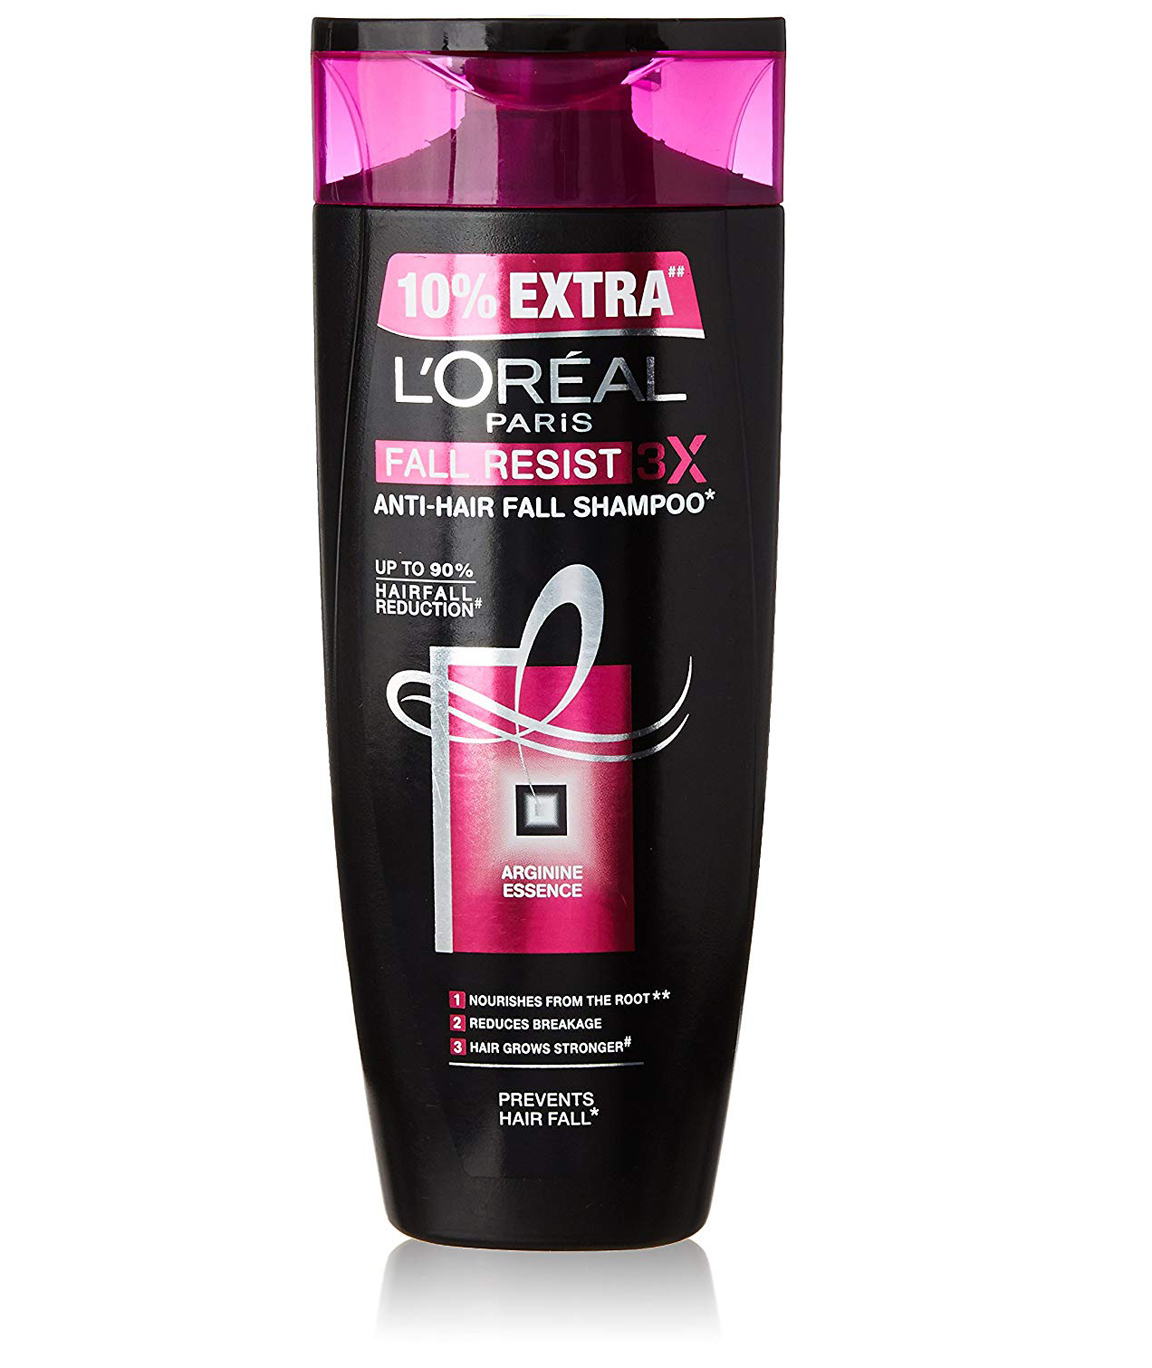 L`Oreal Paris Fall Resist Anti-Hair Fall Shampoo 3X, 192.5 ml (175ml + 17.5ml with 10% Extra)